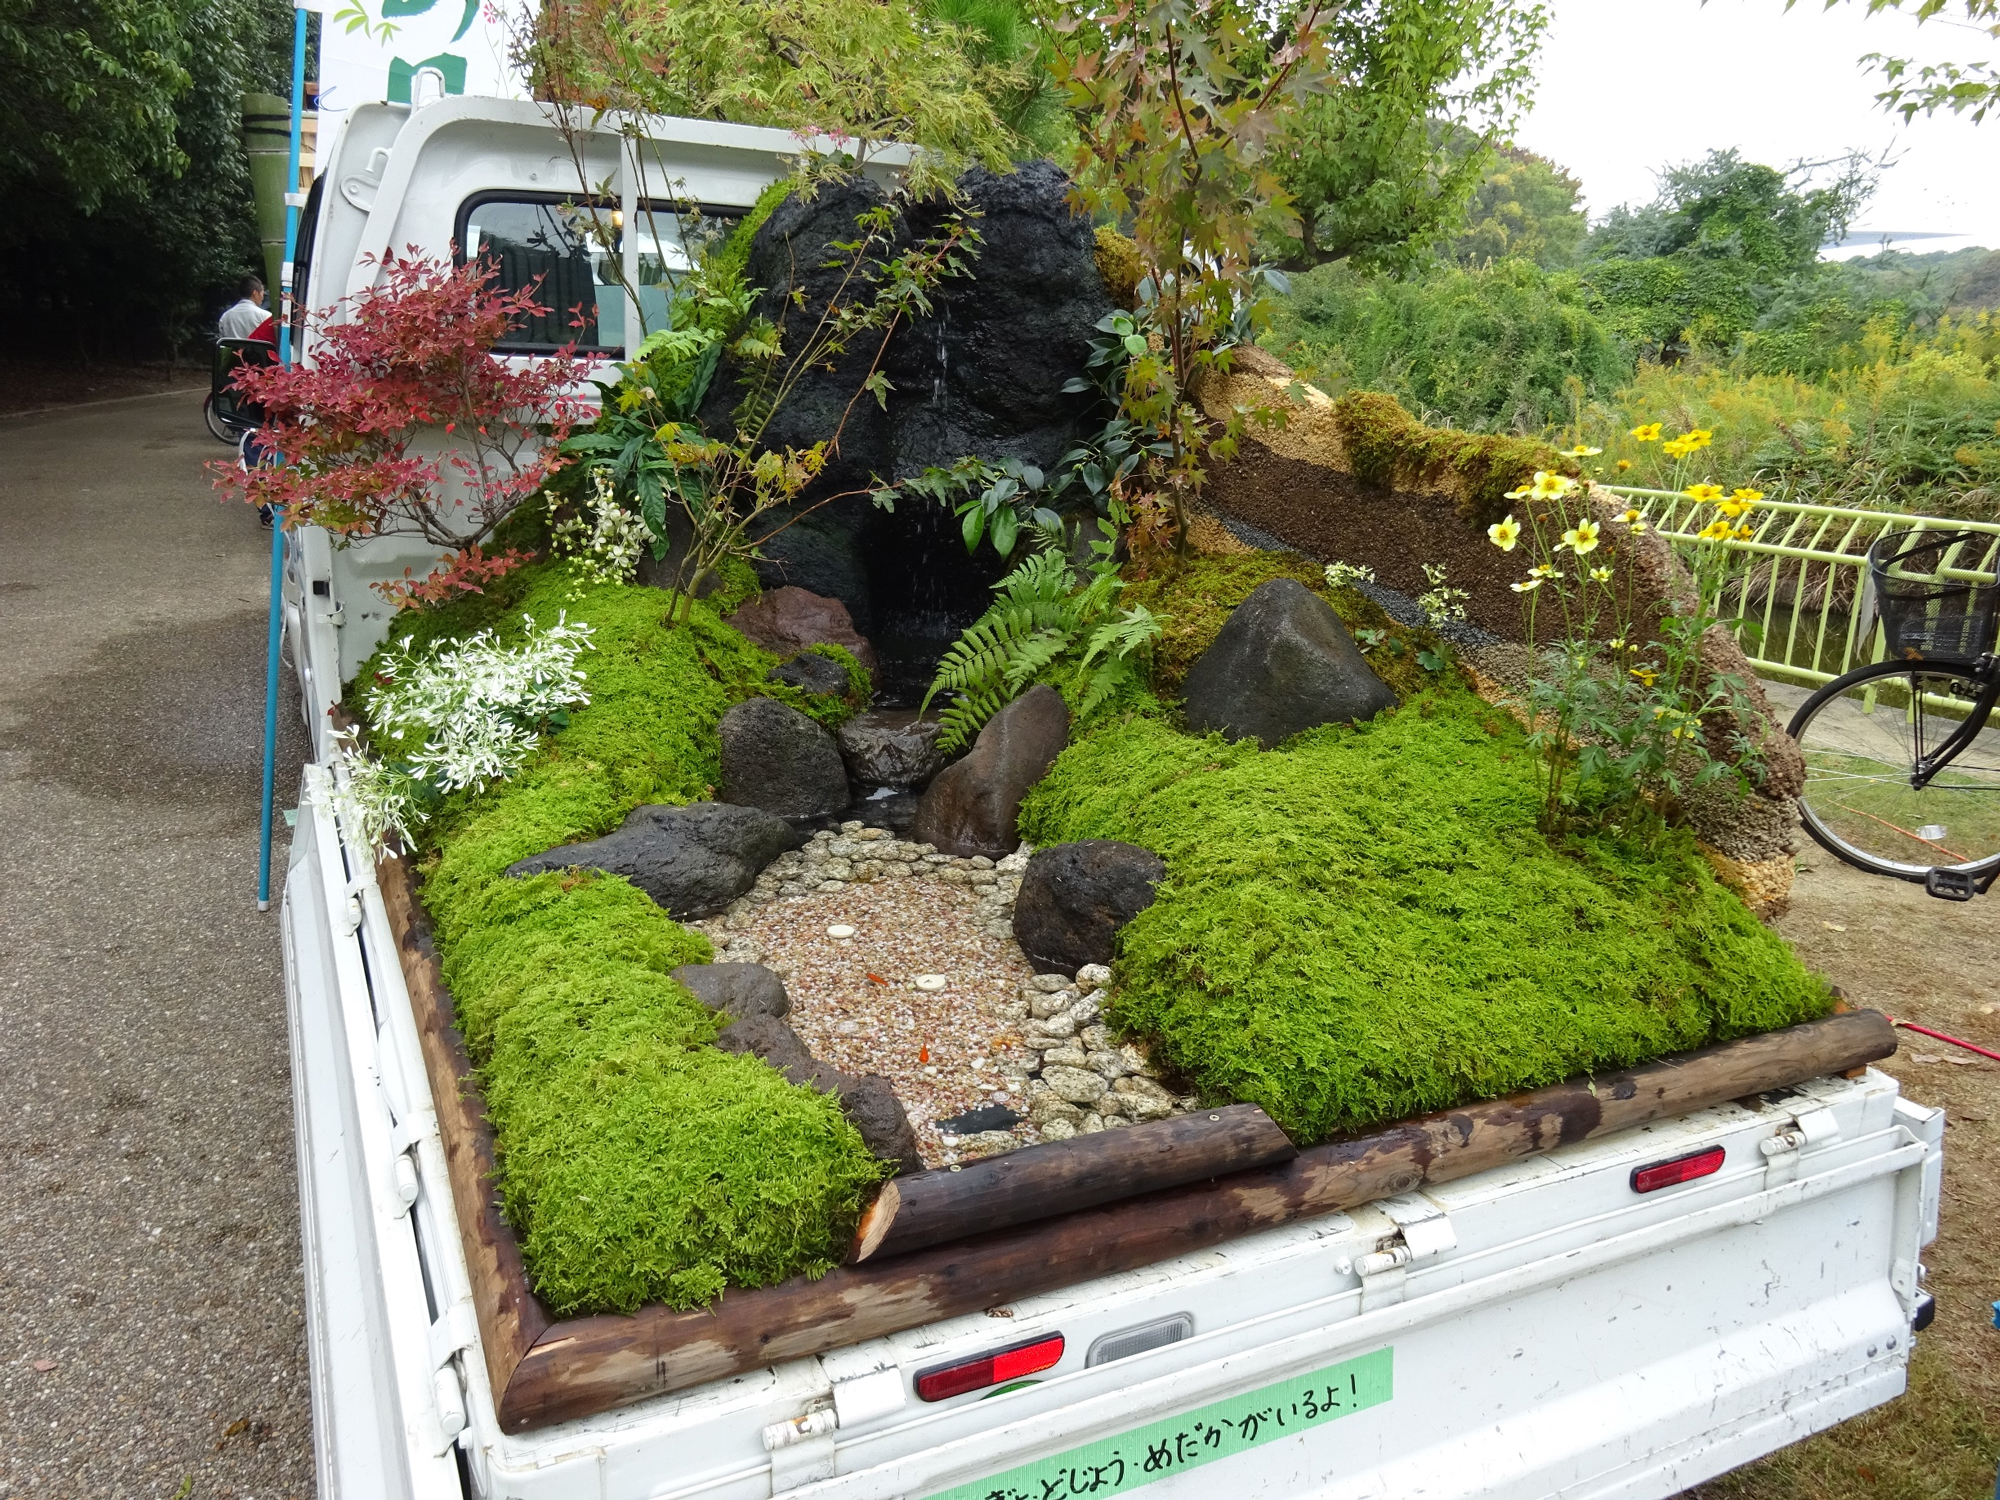 Green gardening truck photo